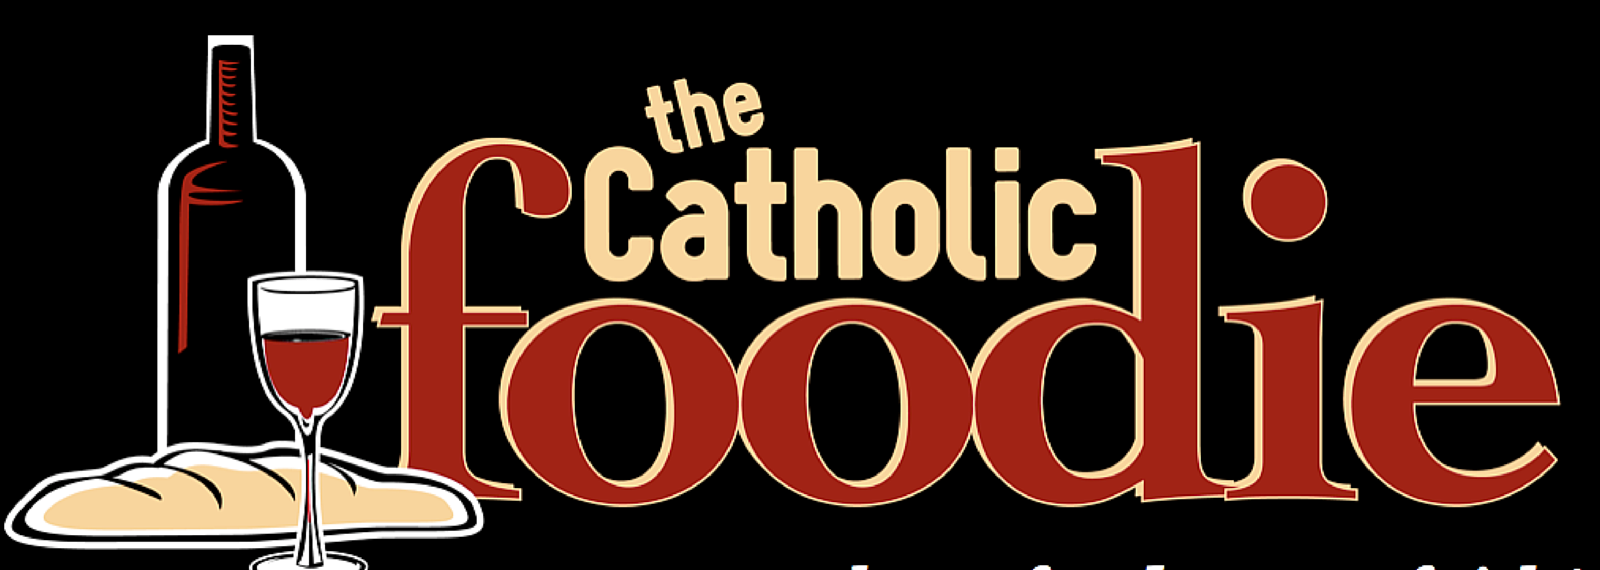 The Catholic Foodie